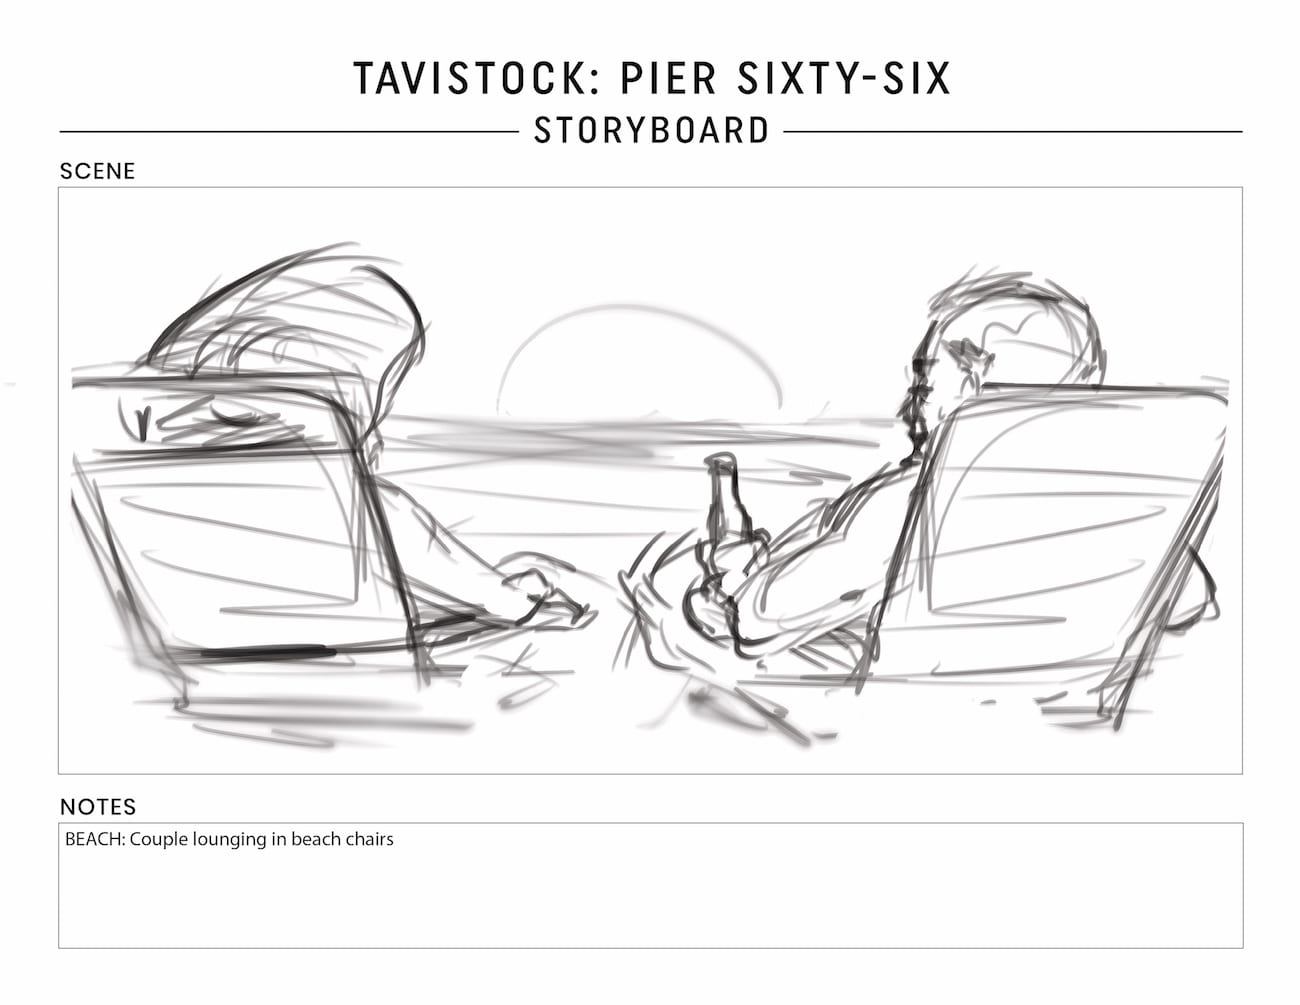 Tavistock Development Company C&I Studios Marketing Solutions Pier Sixty Six Storyboard Couple lounging in beach chairs